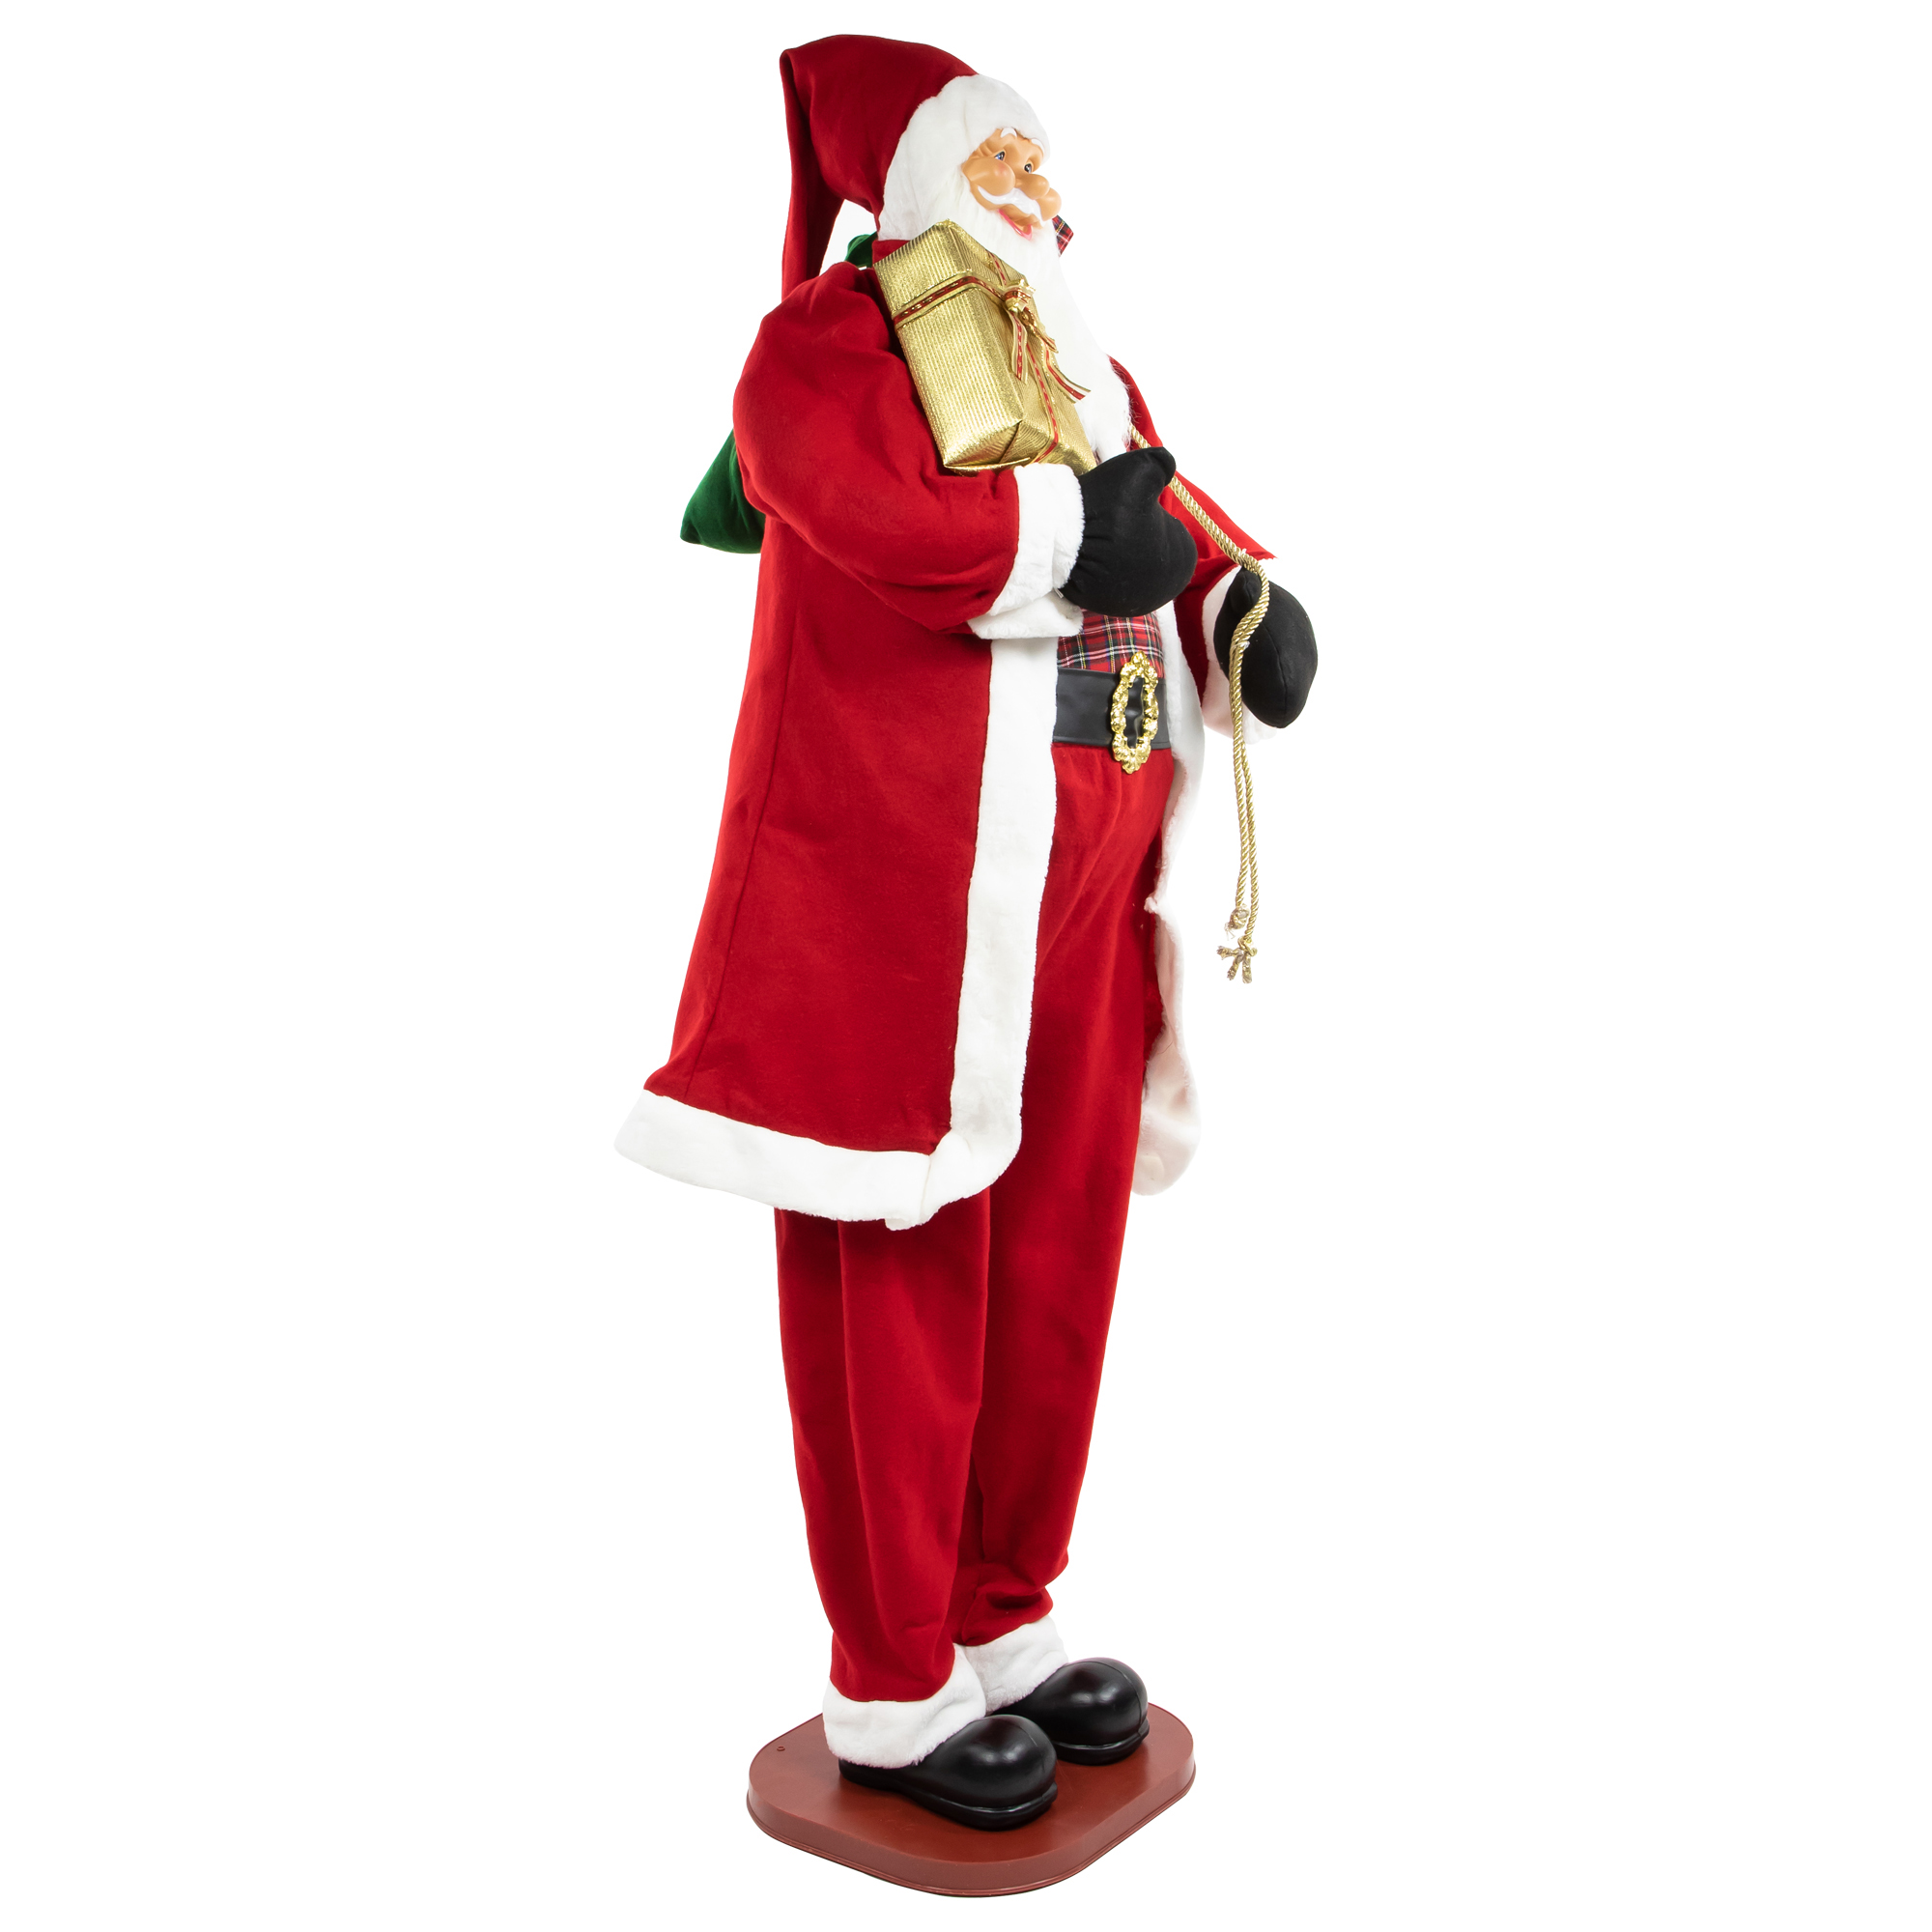 Northlight 72" Country Santa Claus Standing Christmas Figure